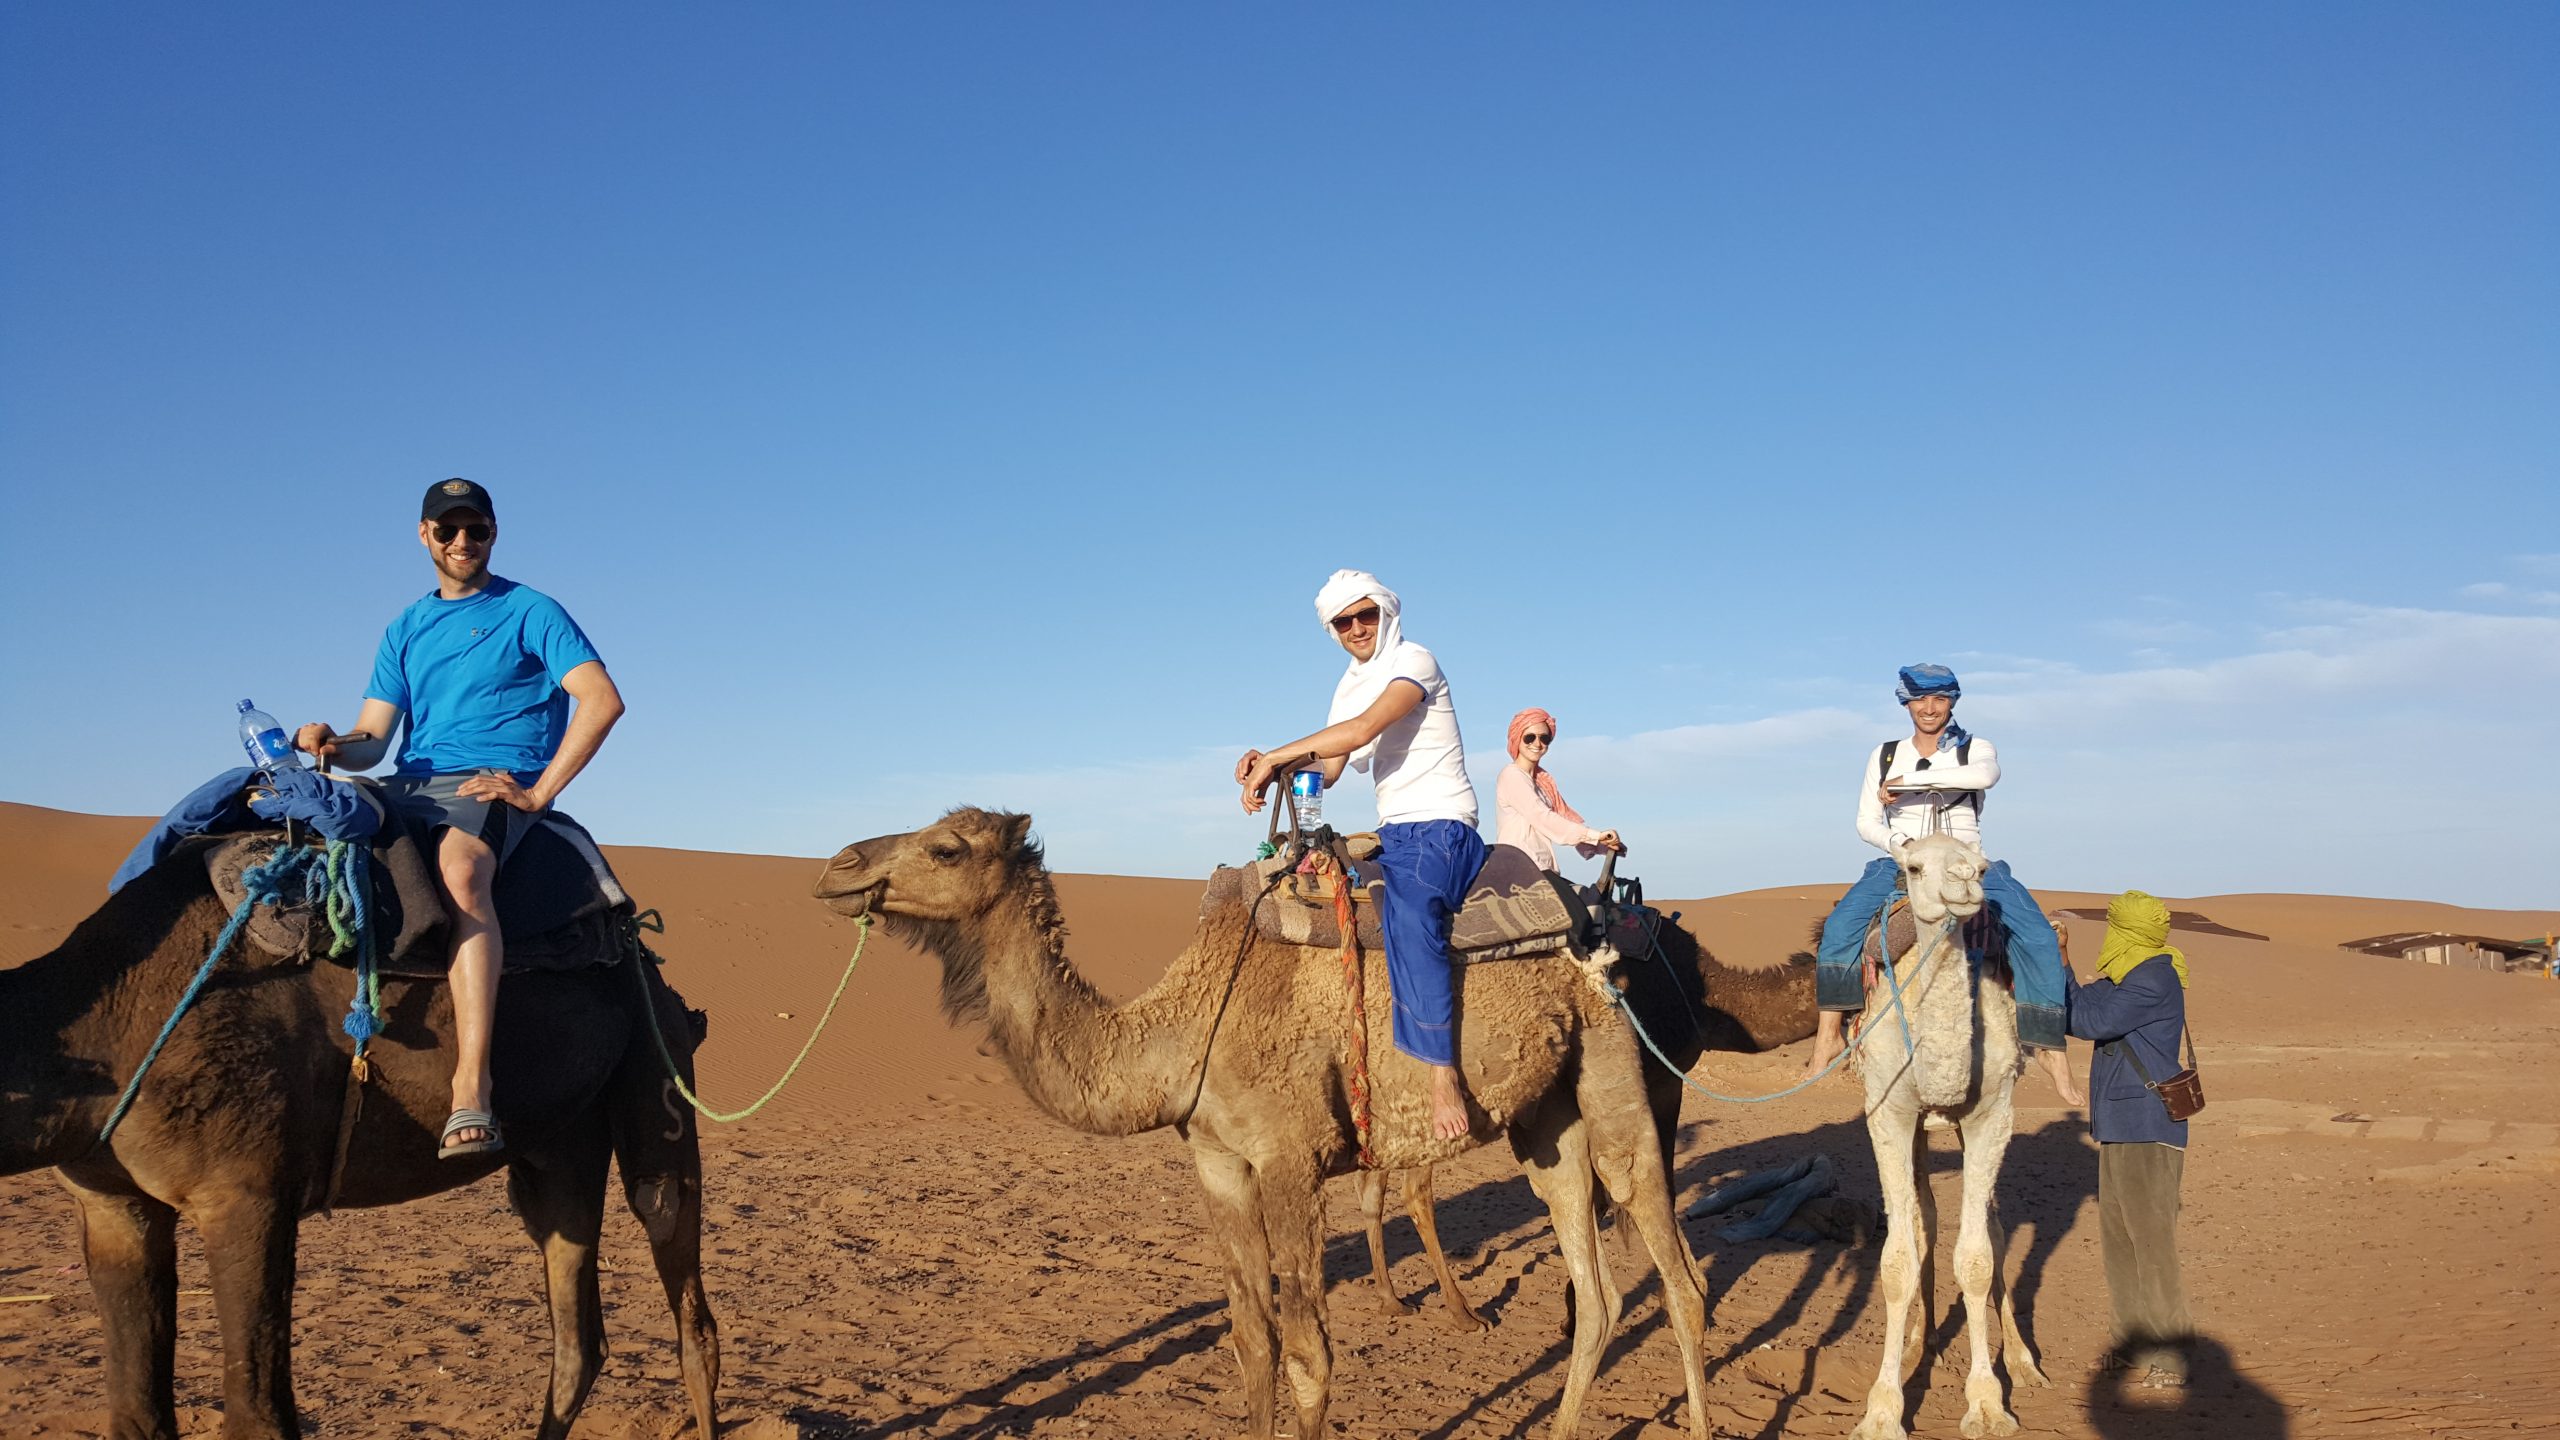 Desert Eco-tourism Trekking Tour 2 Nights: "Morocco desert" Erg Chega Tourga desert